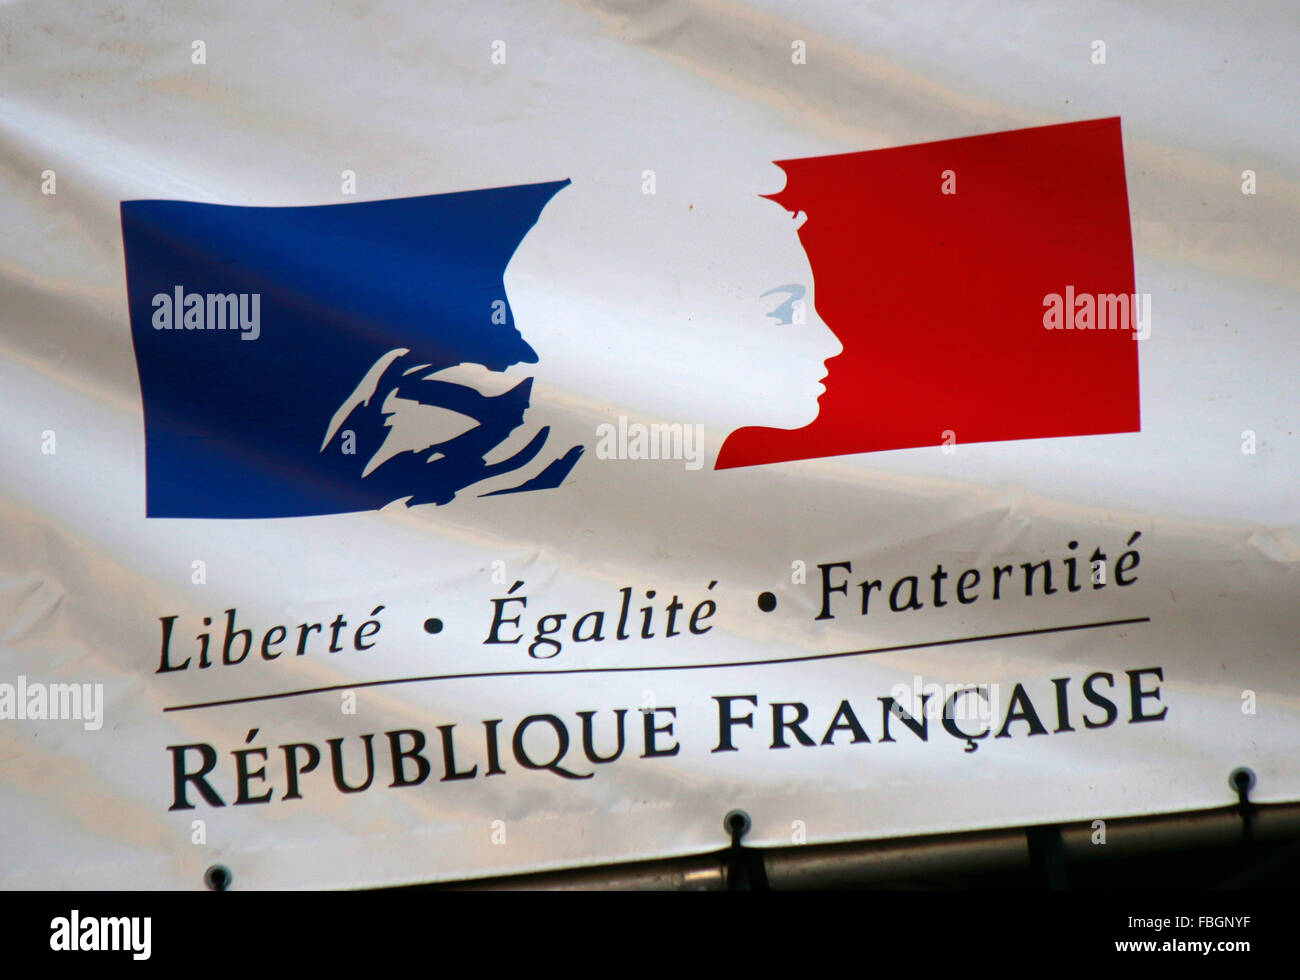 Republique Francaise - Liberte, Egalité, Faternite, Berlin. Stockfoto